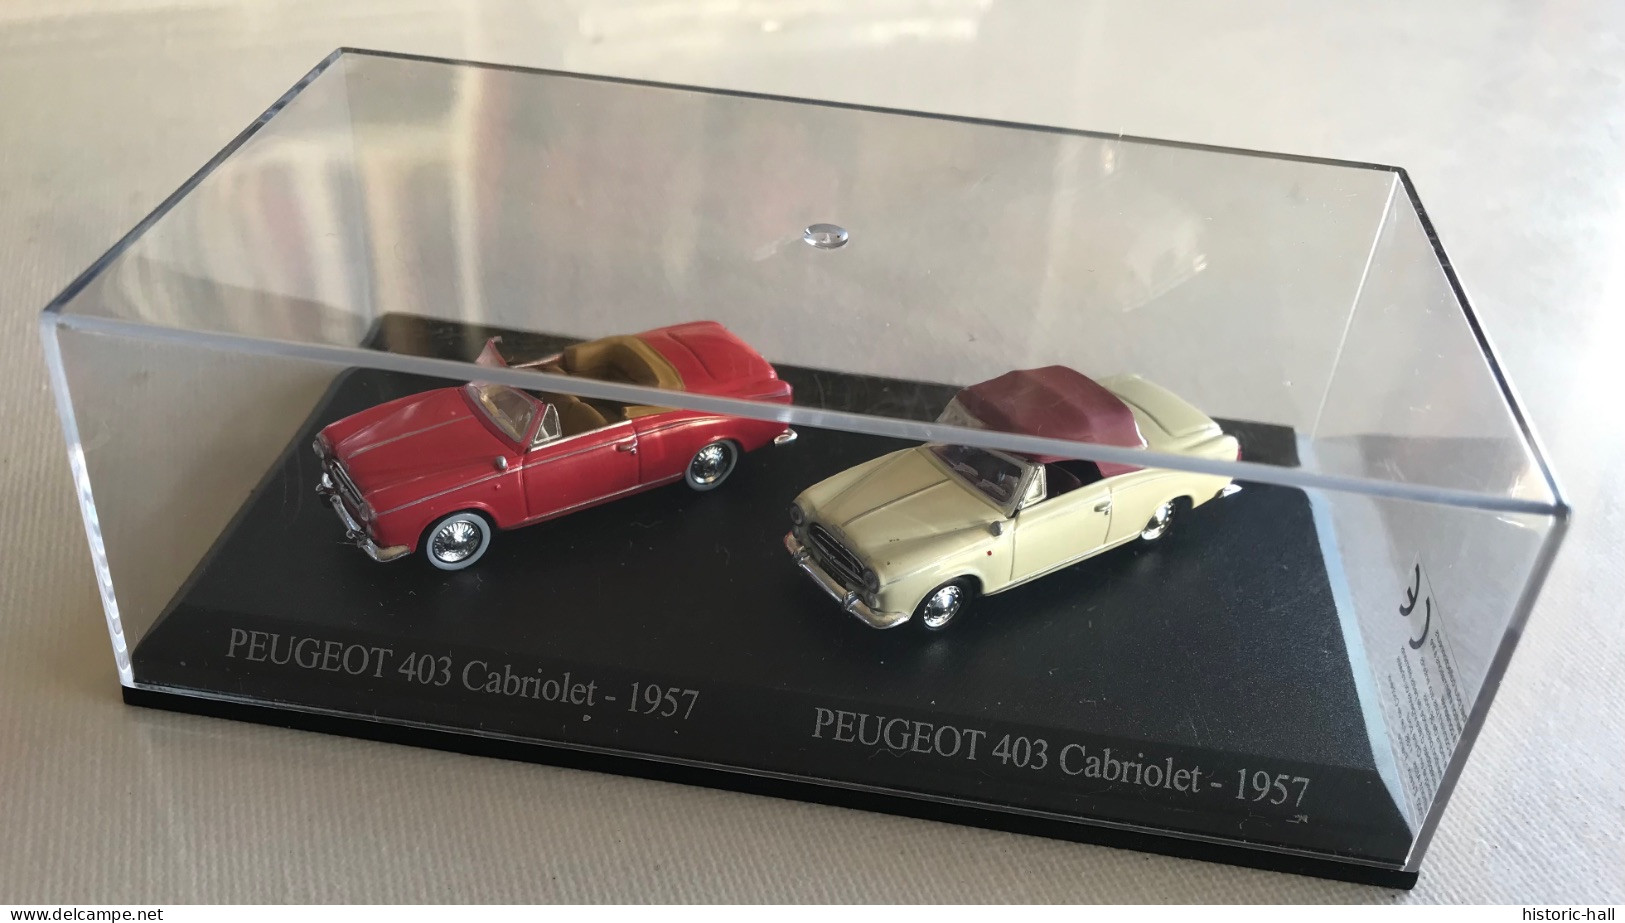 UNIVERSAL HOBBIES - Duo PEUGEOT 403 Cabriolet 1957 - Scale 1:87